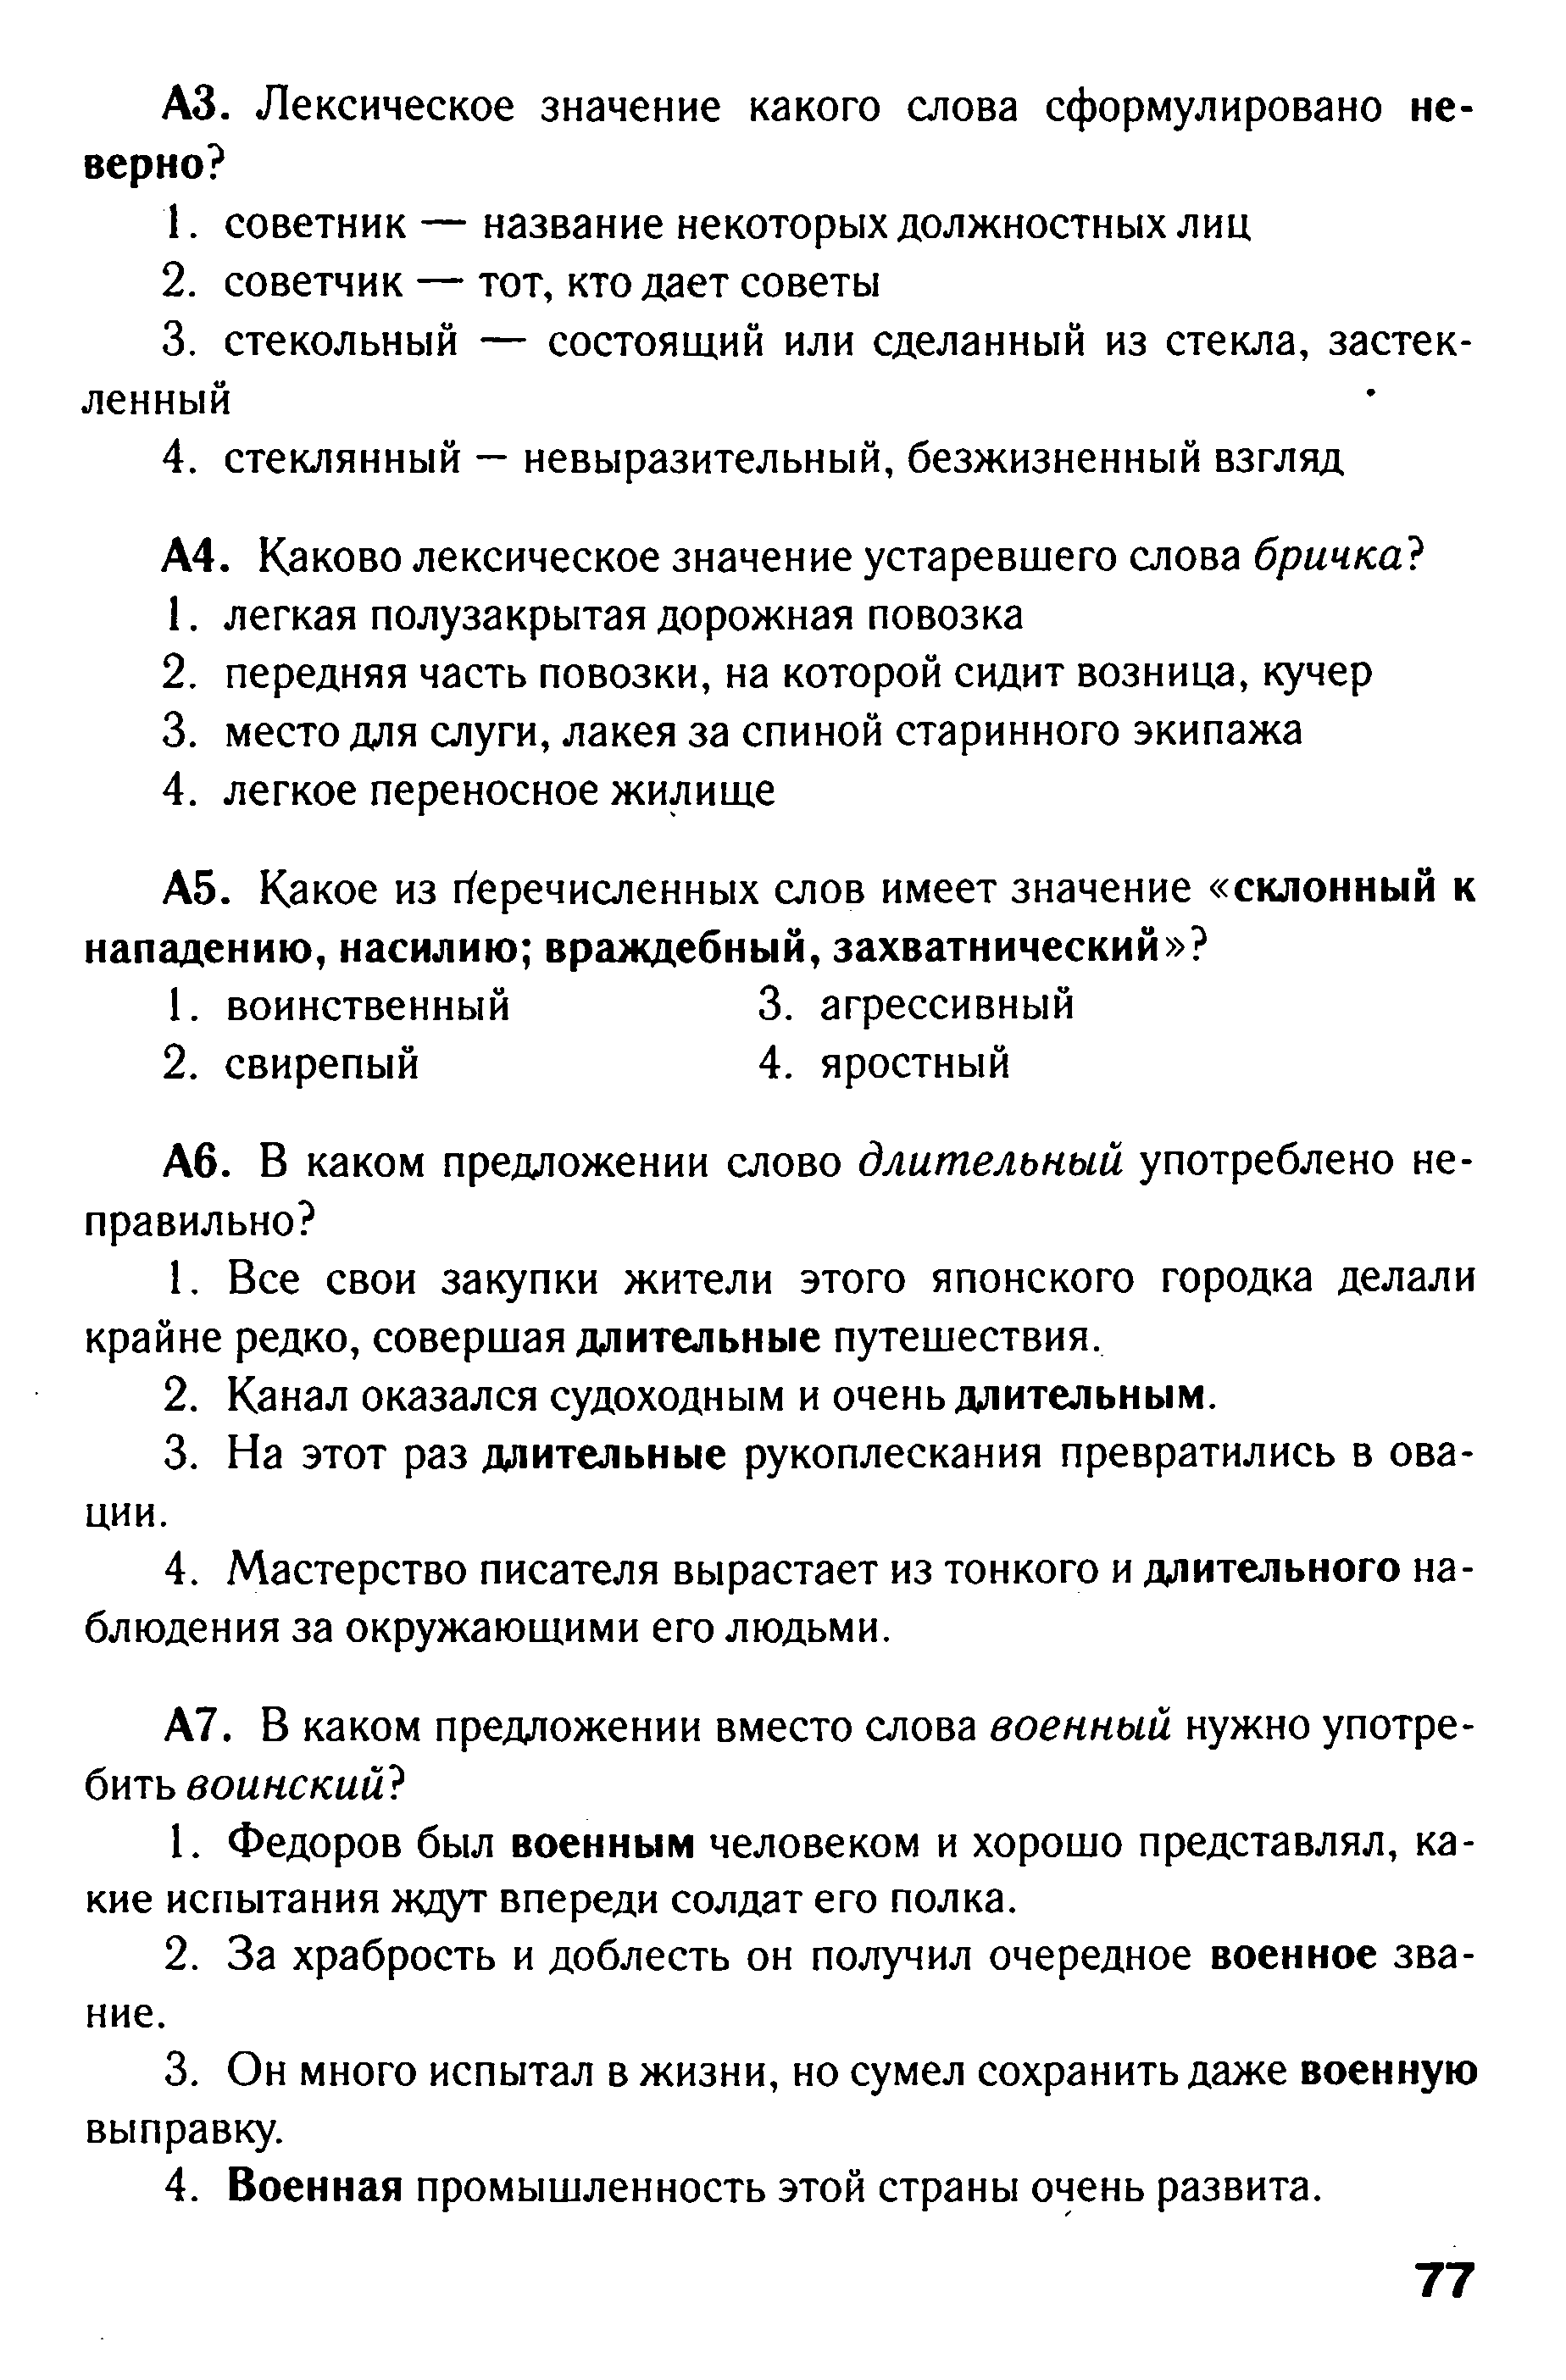 Тест по русскому языку в формате ГИА на тему Лексика. Культура речи вариант 1 (5 класс)